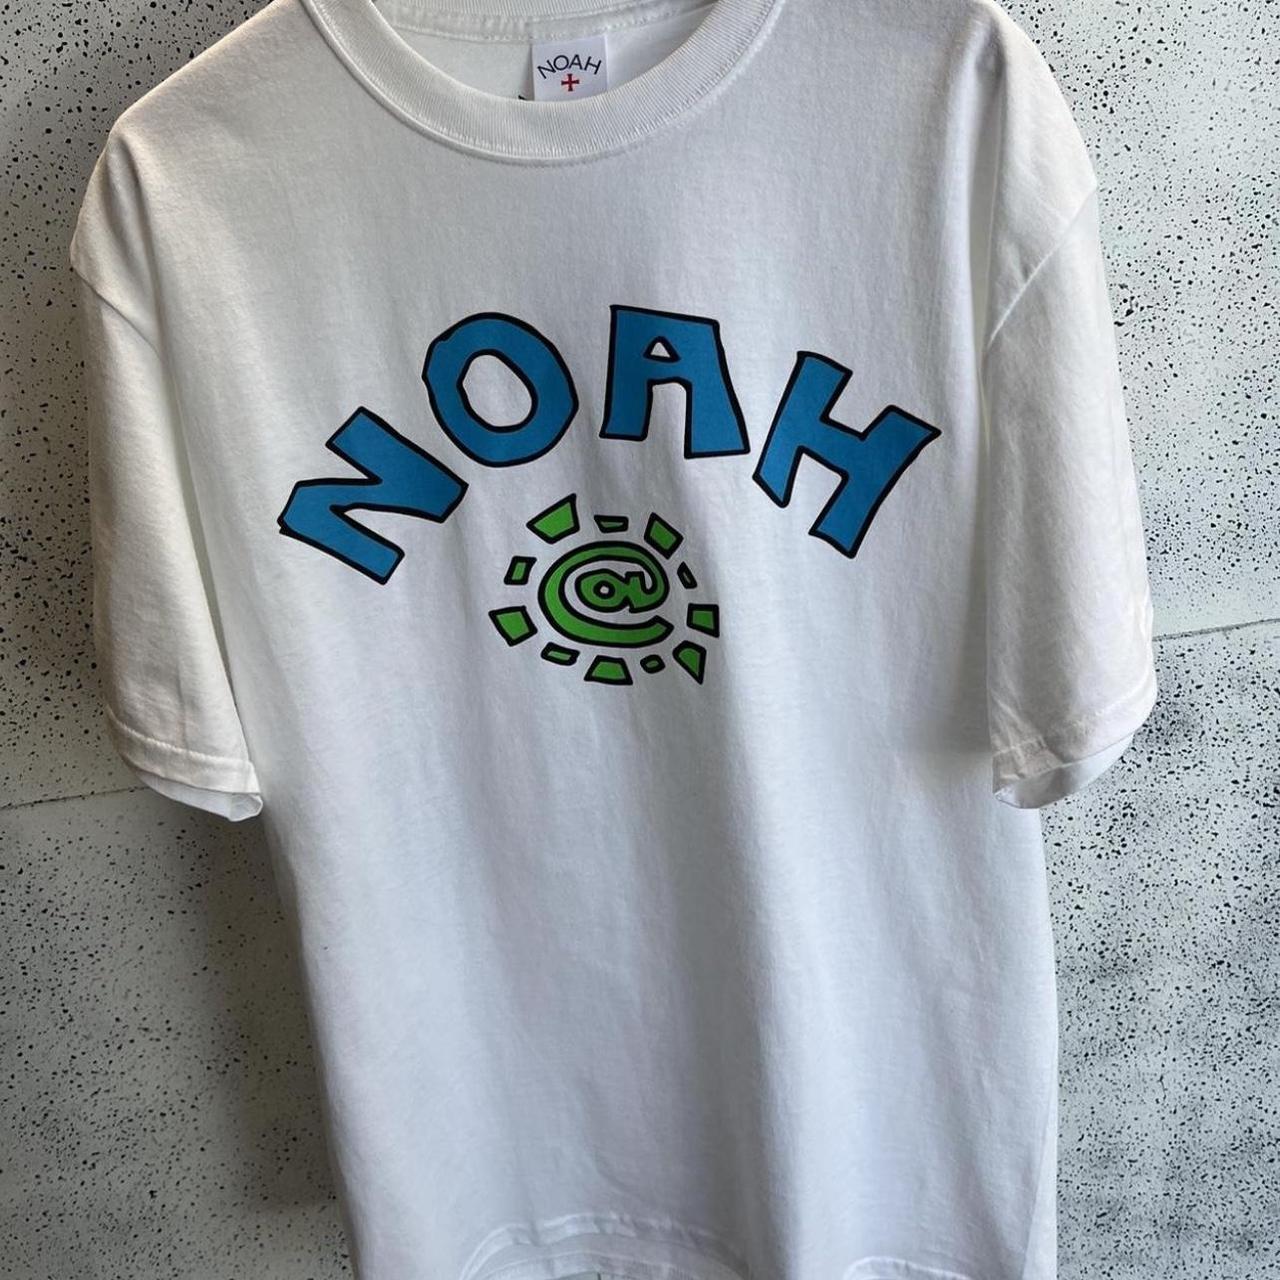 Noah x Always do what you should do Tシャツnoah - Tシャツ ...